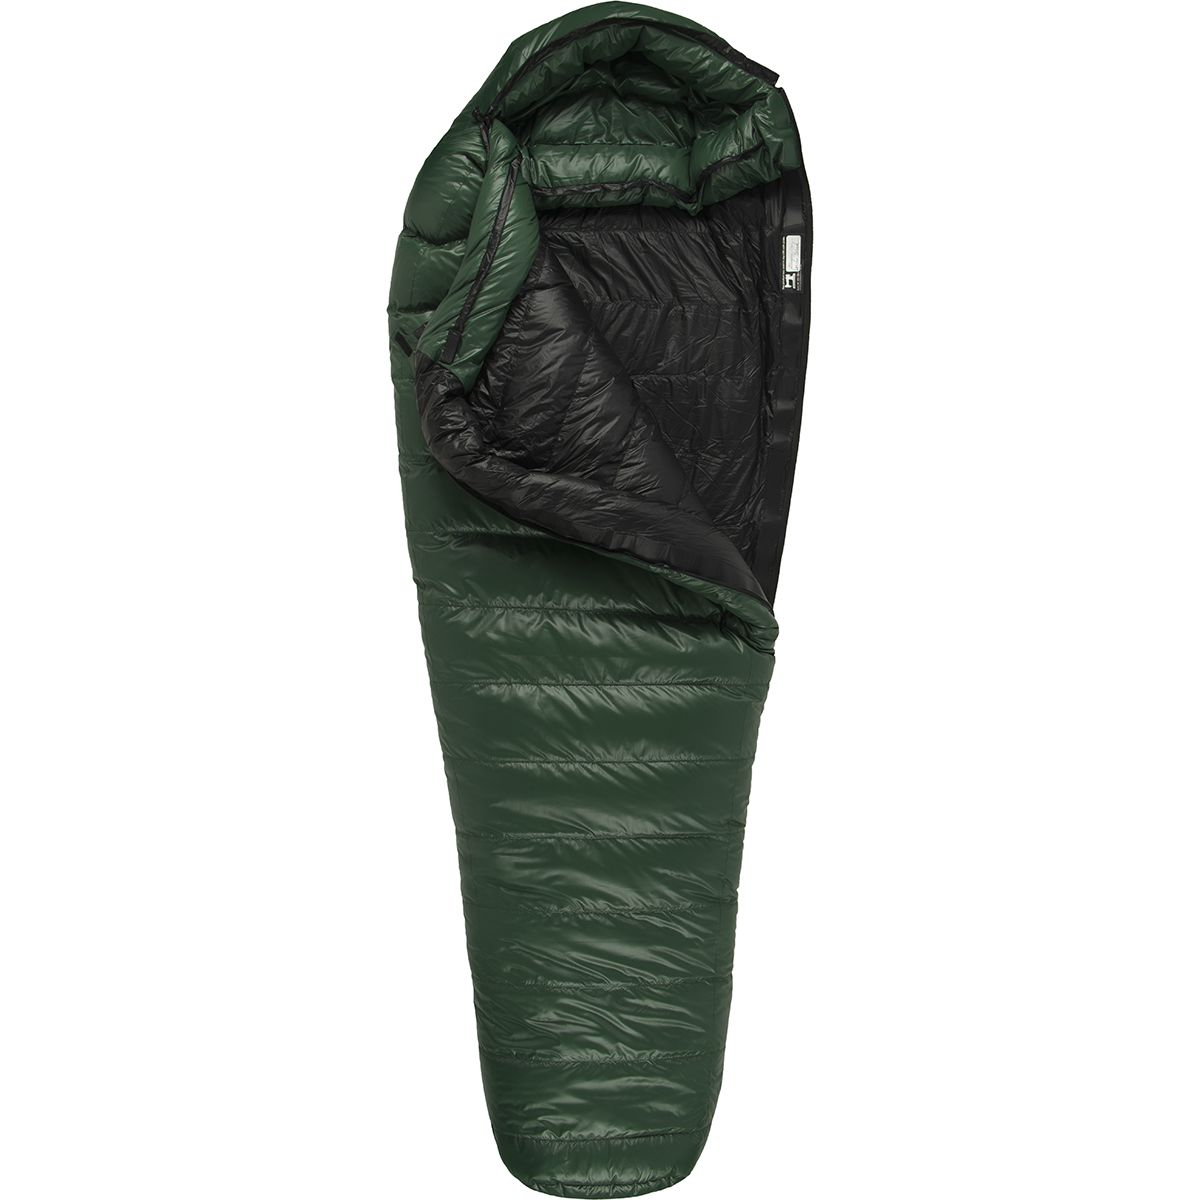 Western Mountaineering Badger MF Sleeping Bag: 15 Degree 